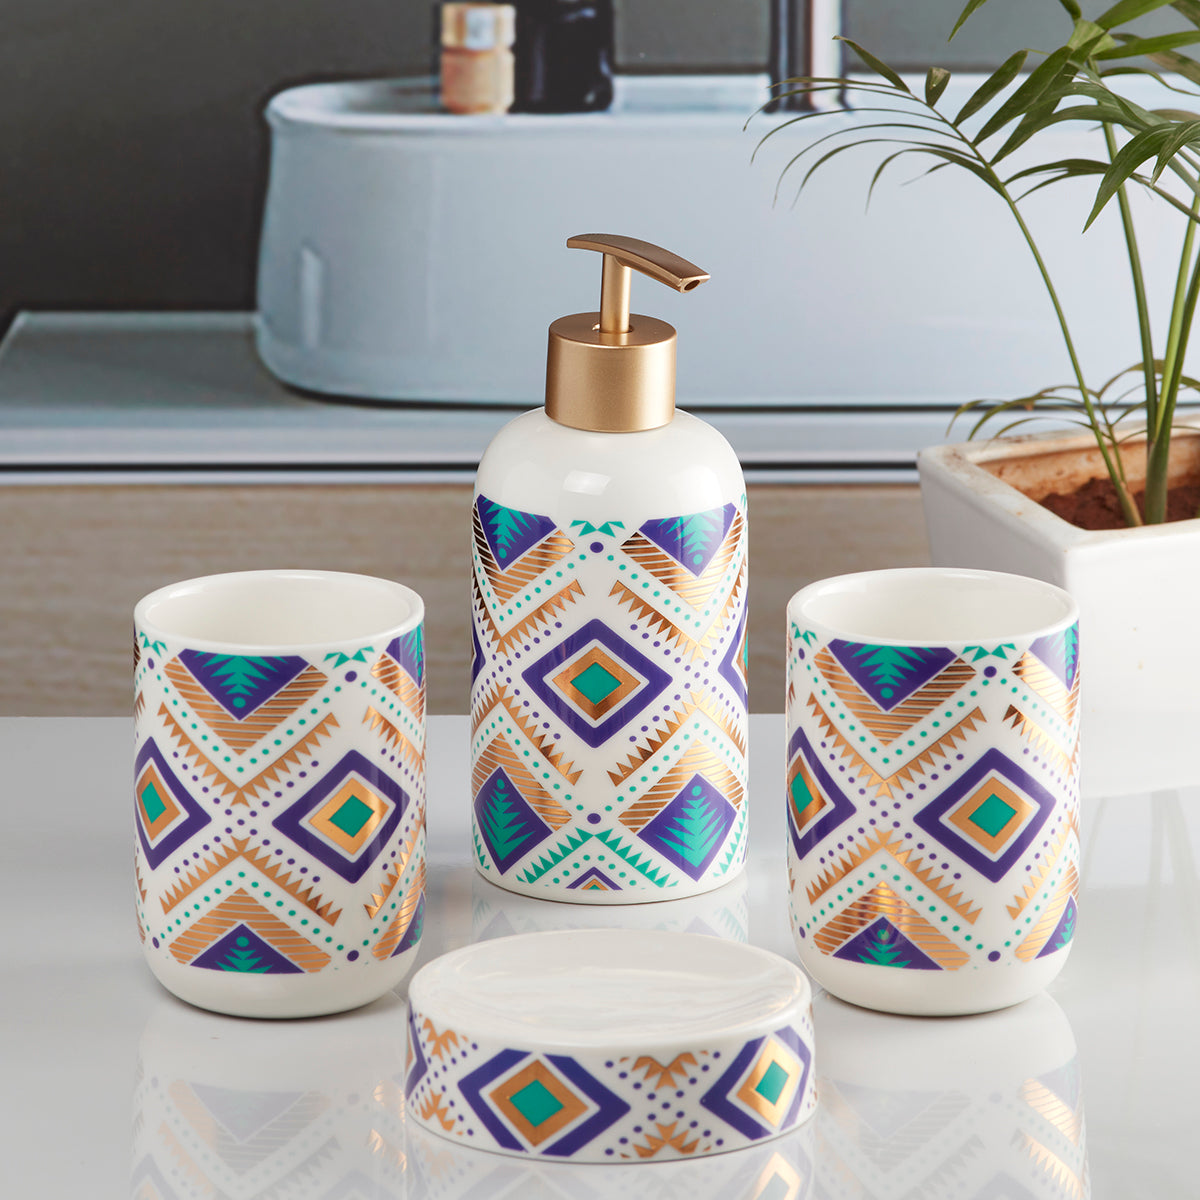 Ceramic Bathroom Accessories Set of 4 Bath Set with Soap Dispenser (10076)